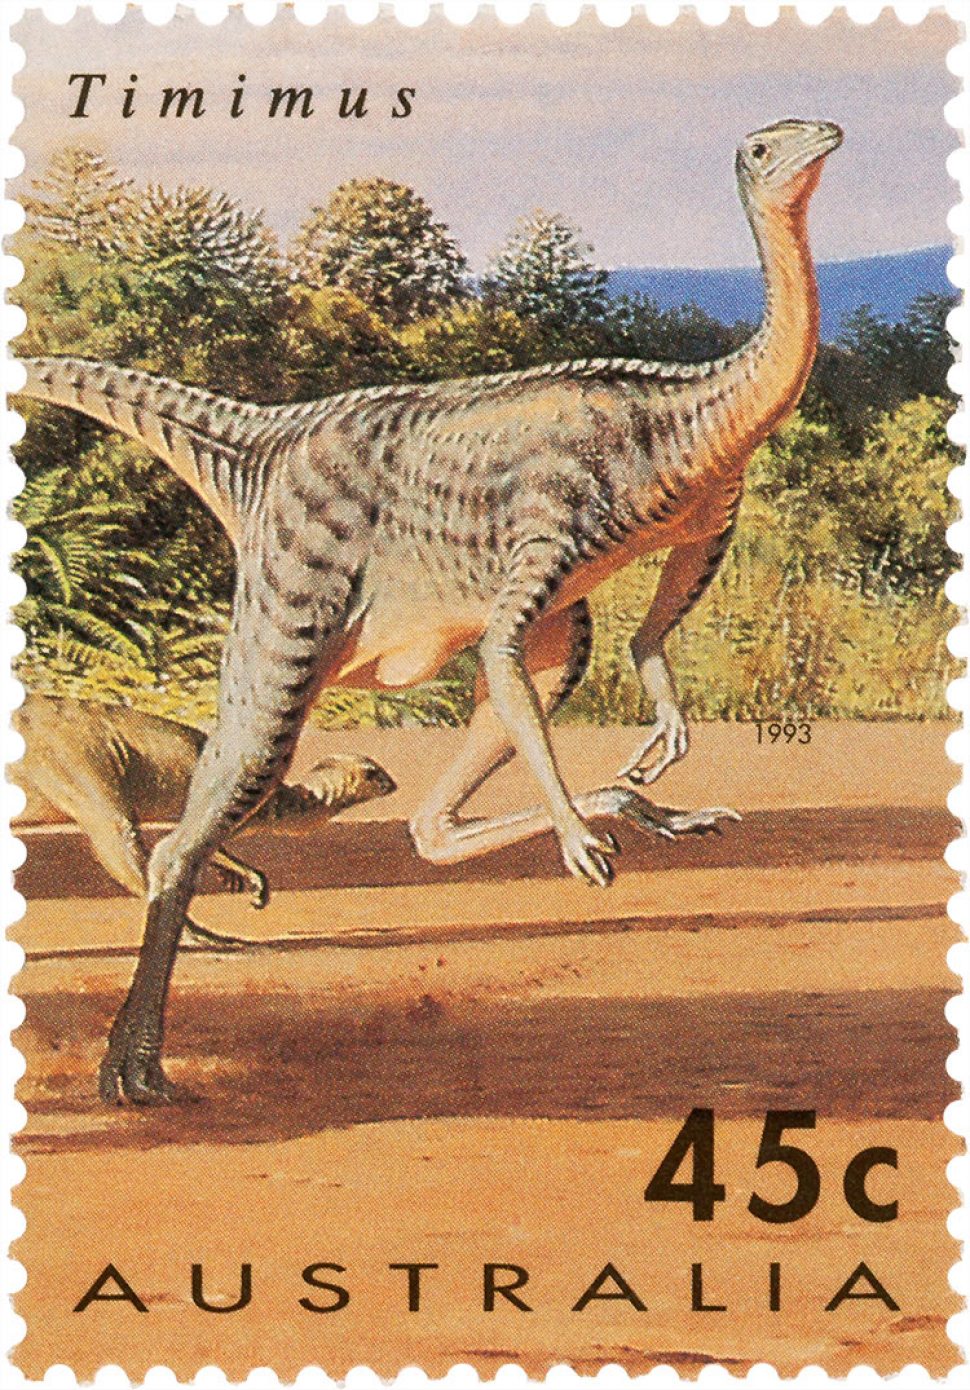 45 cent stamp featuring a running dinosaur